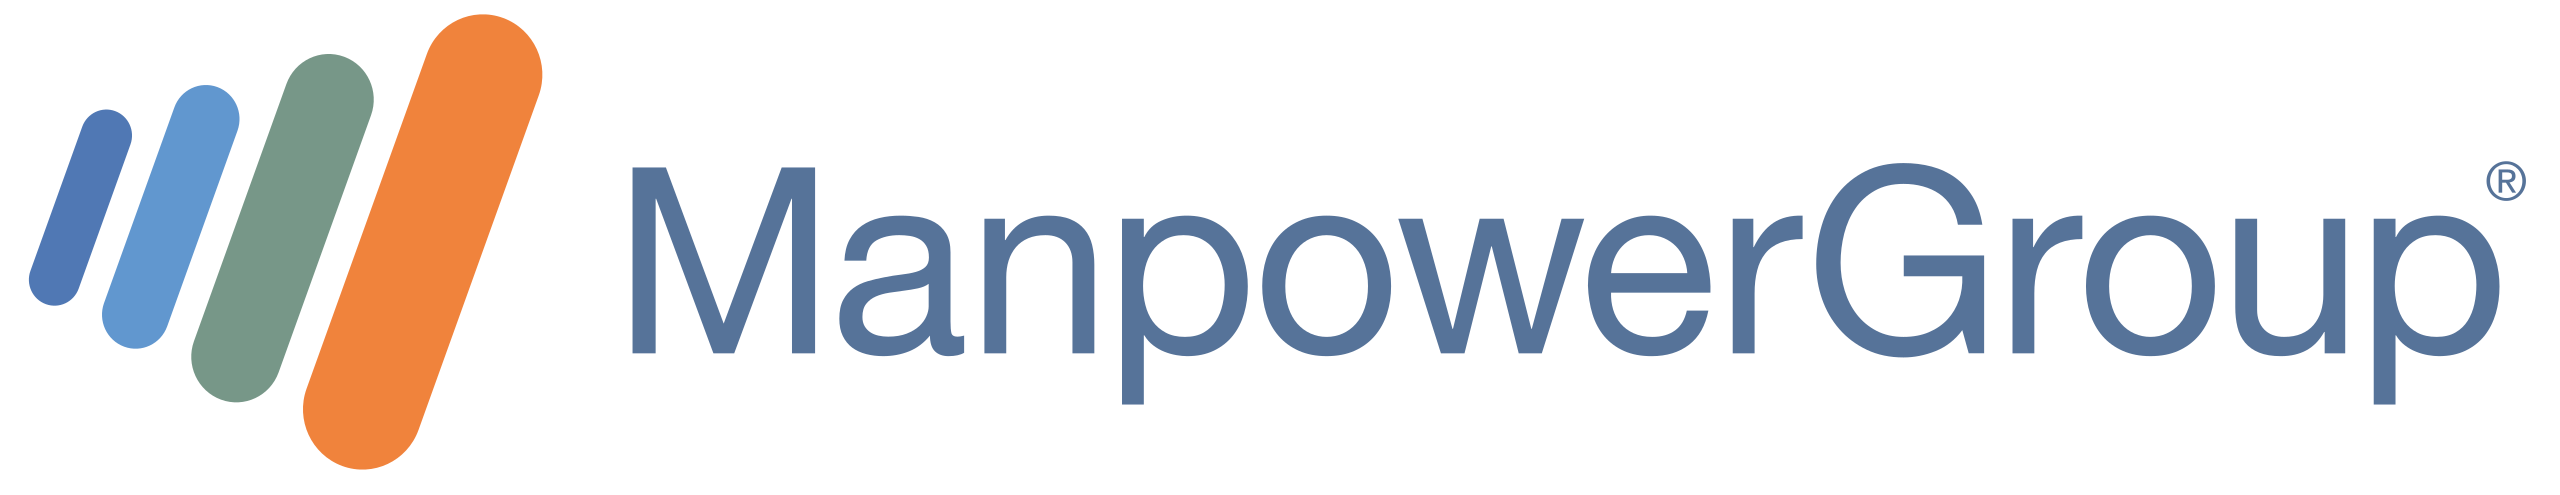 ManpowerGroup_logo